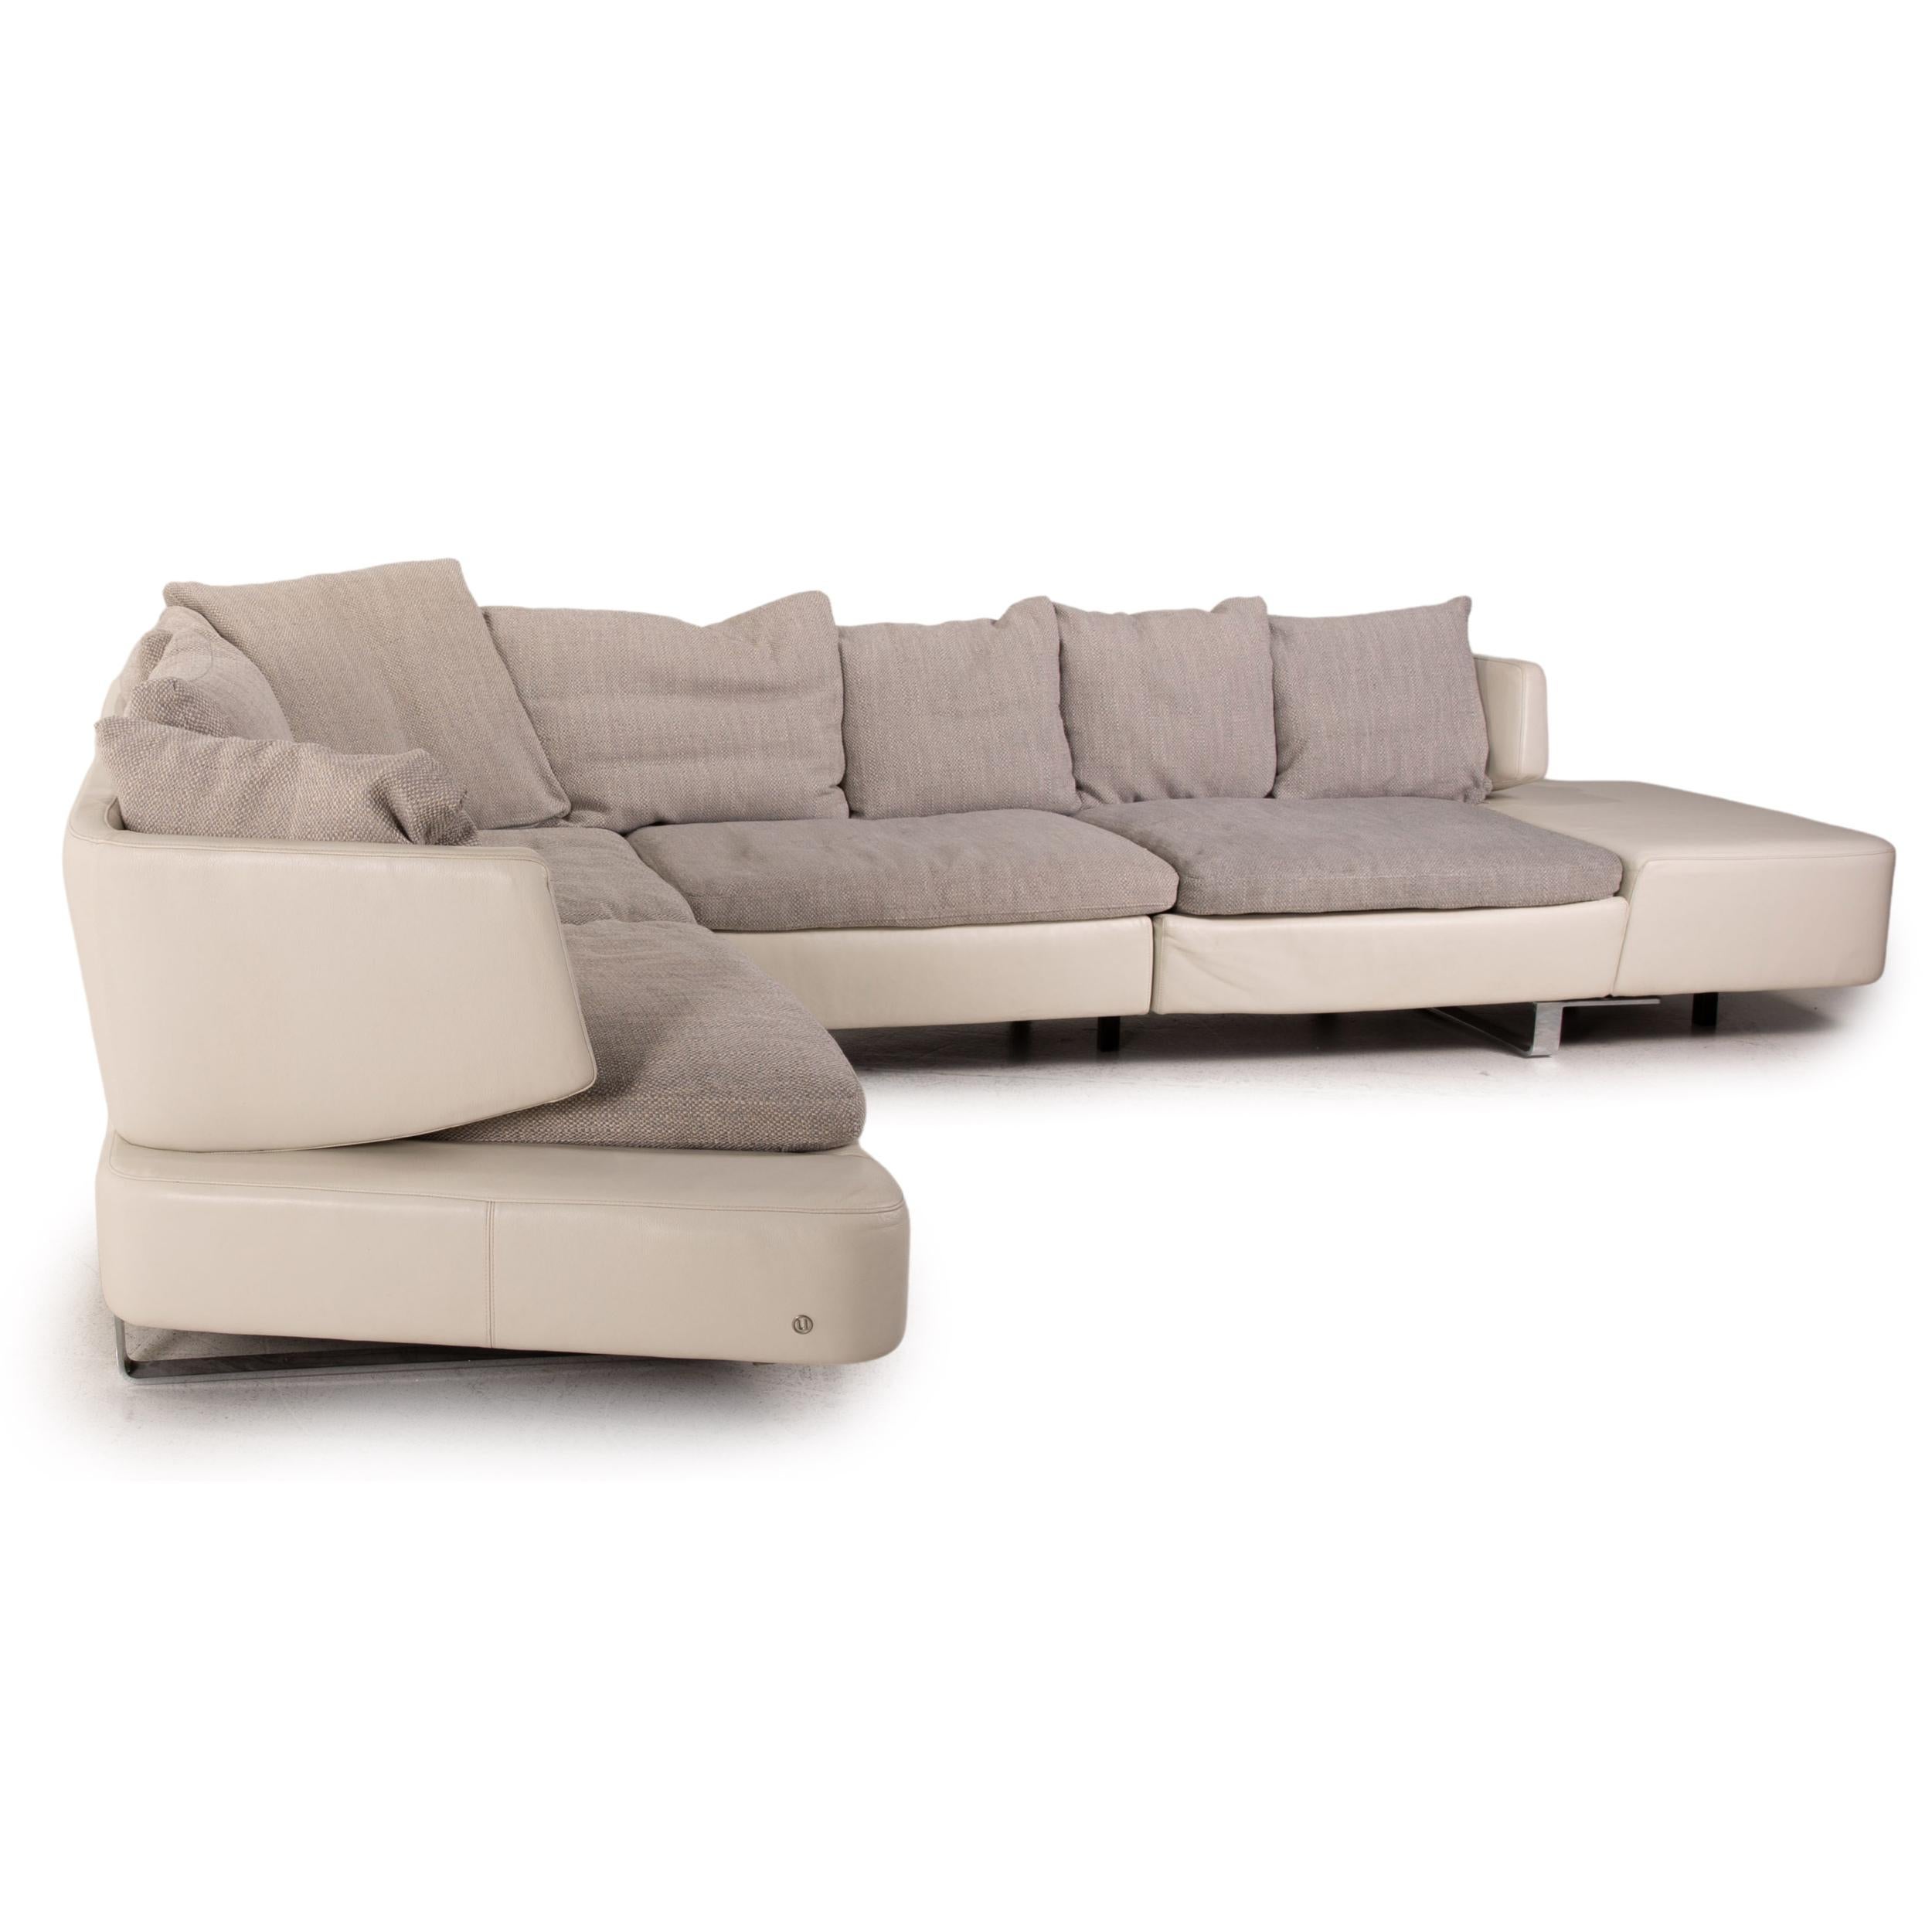 Natuzzi Opus Leather Fabric Corner Sofa Gray Cream Sofa Couch For Sale 3